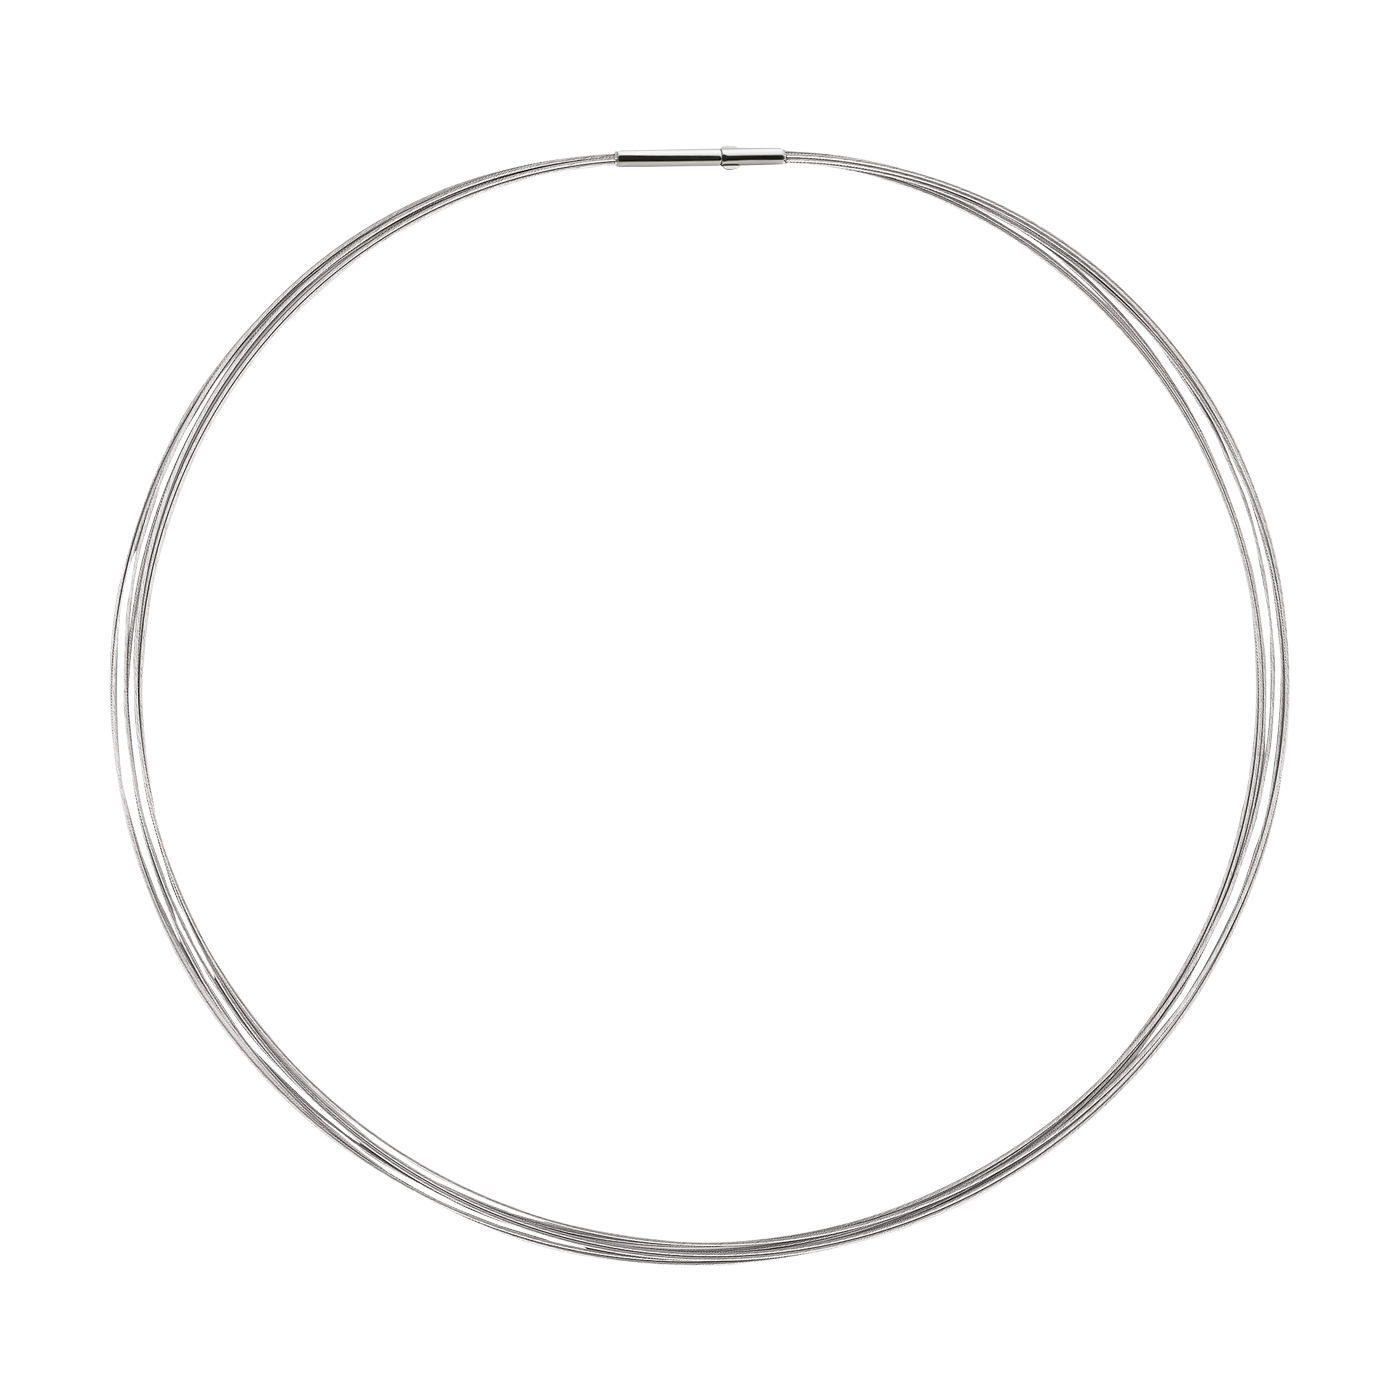 Rope Necklace, 7 Rows, Double Clip Closure, ø 0.5 mm, 42 cm - 1 piece